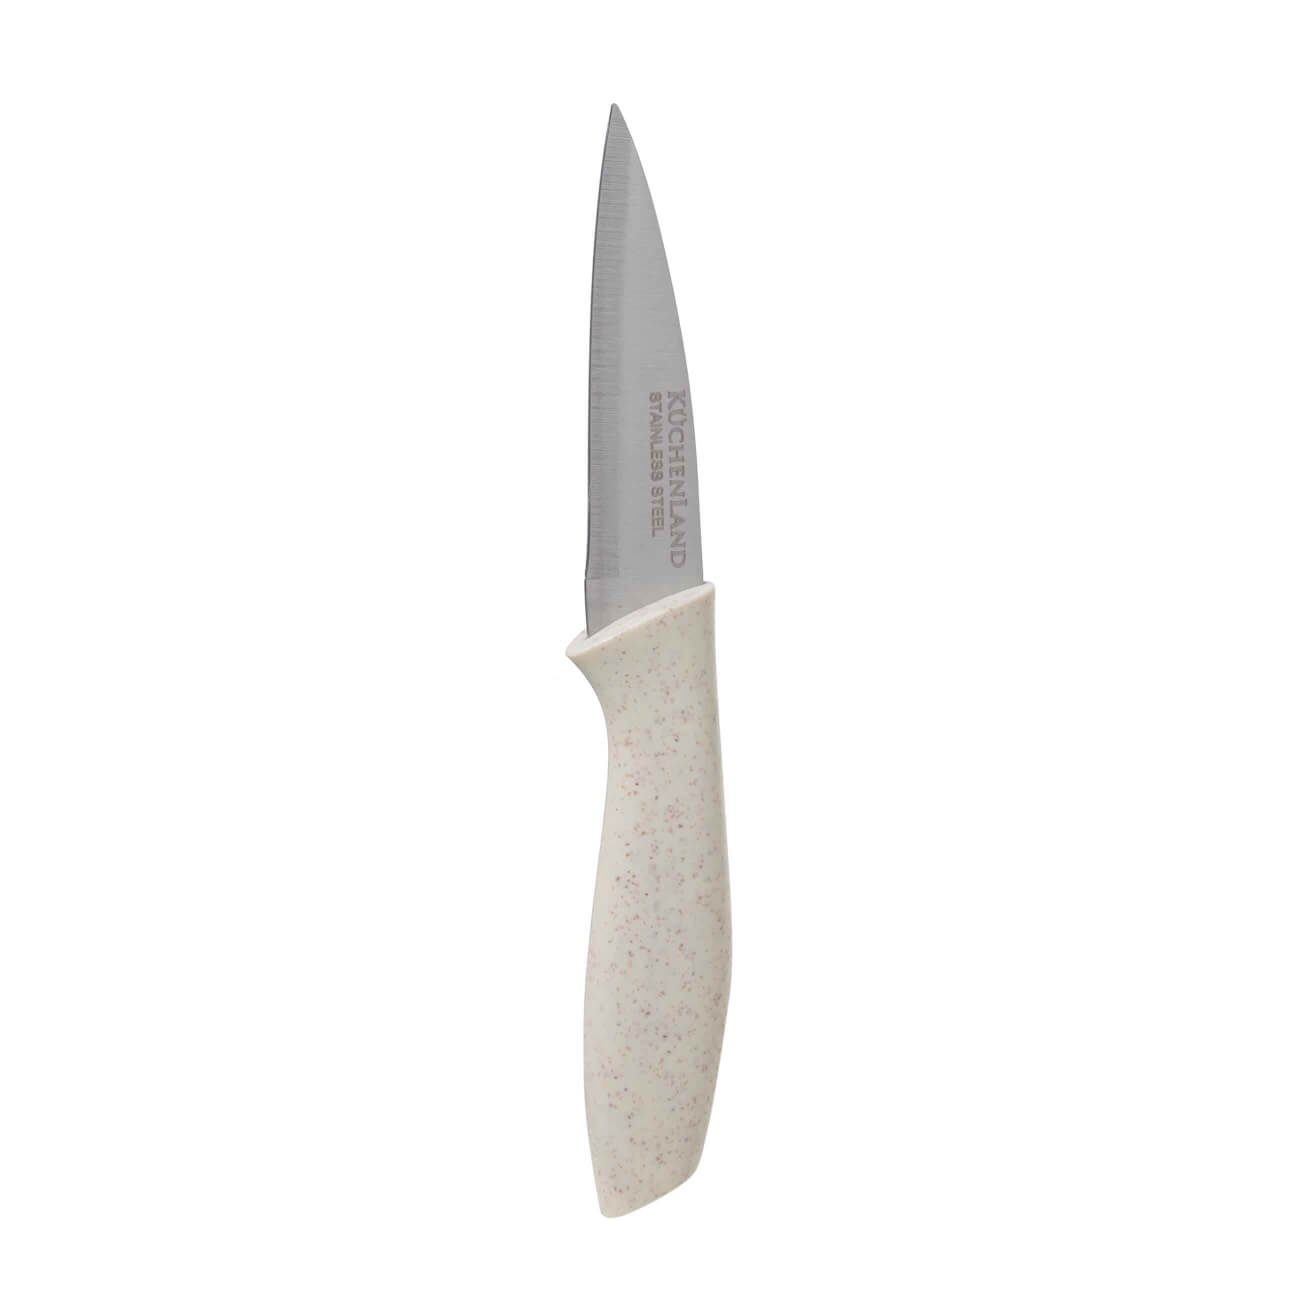 Нож для чистки овощей, 9 см, сталь/пластик, молочный, Speck-light нож tescoma для овощей precioso 13 см